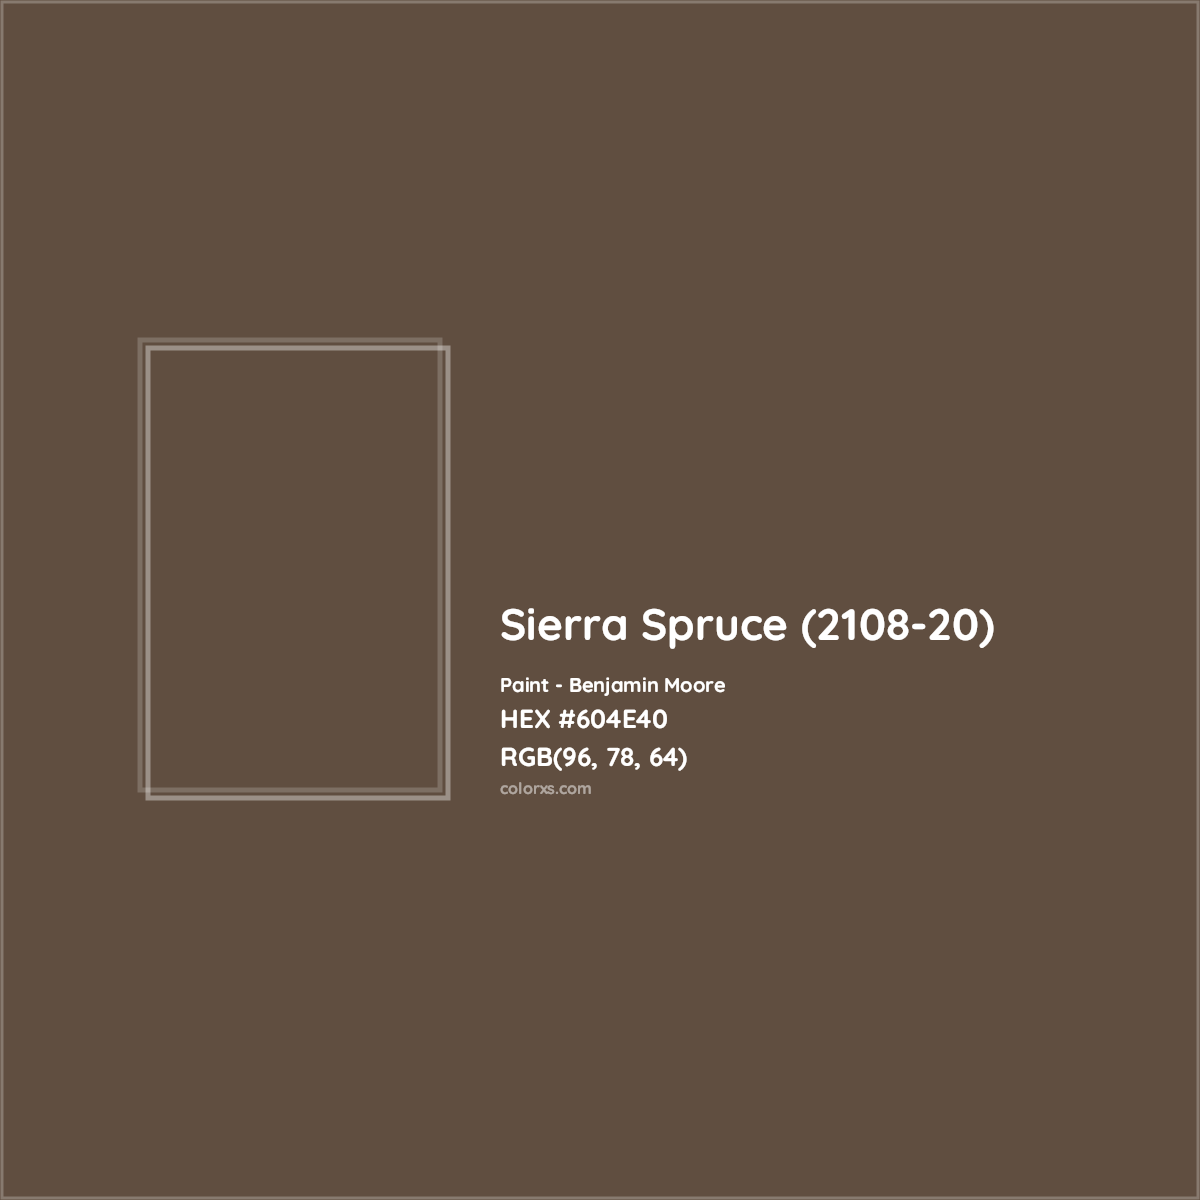 HEX #604E40 Sierra Spruce (2108-20) Paint Benjamin Moore - Color Code